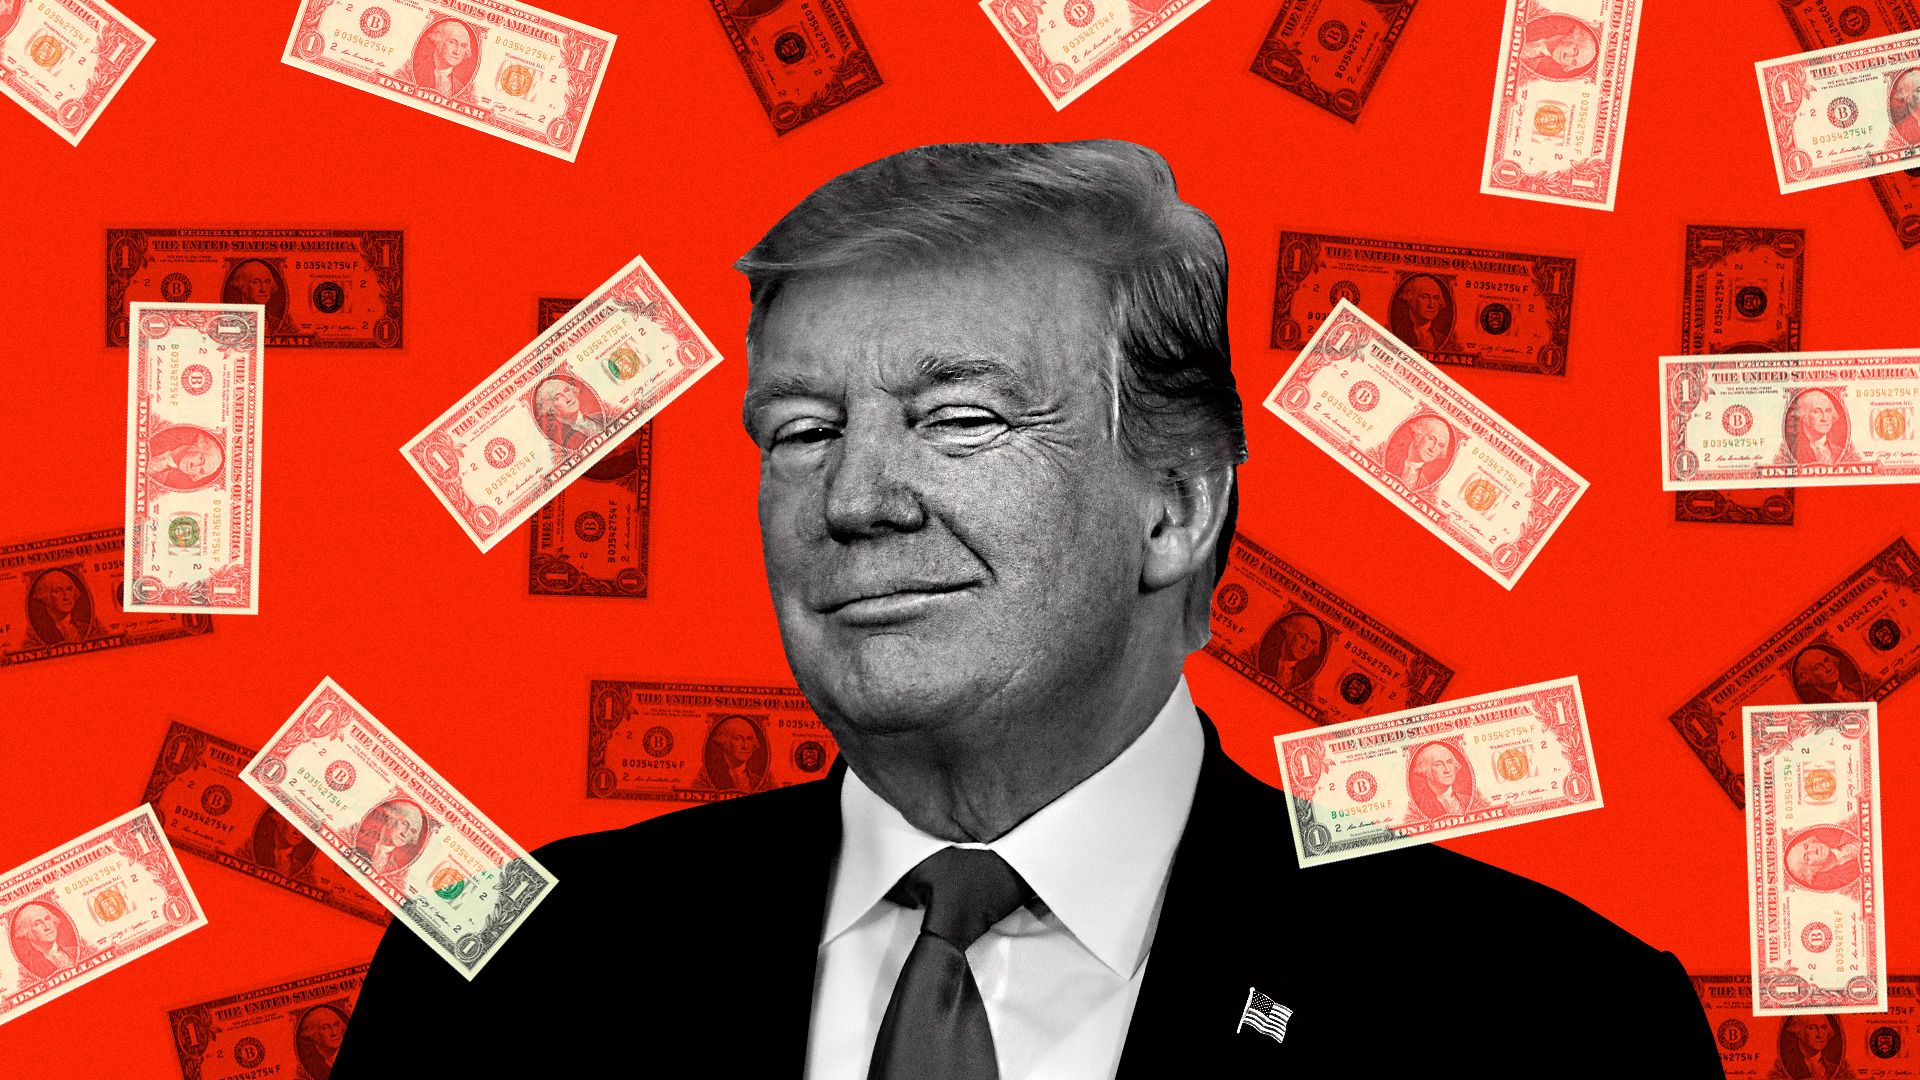 Trump smiling while dollar bills are raining all around him